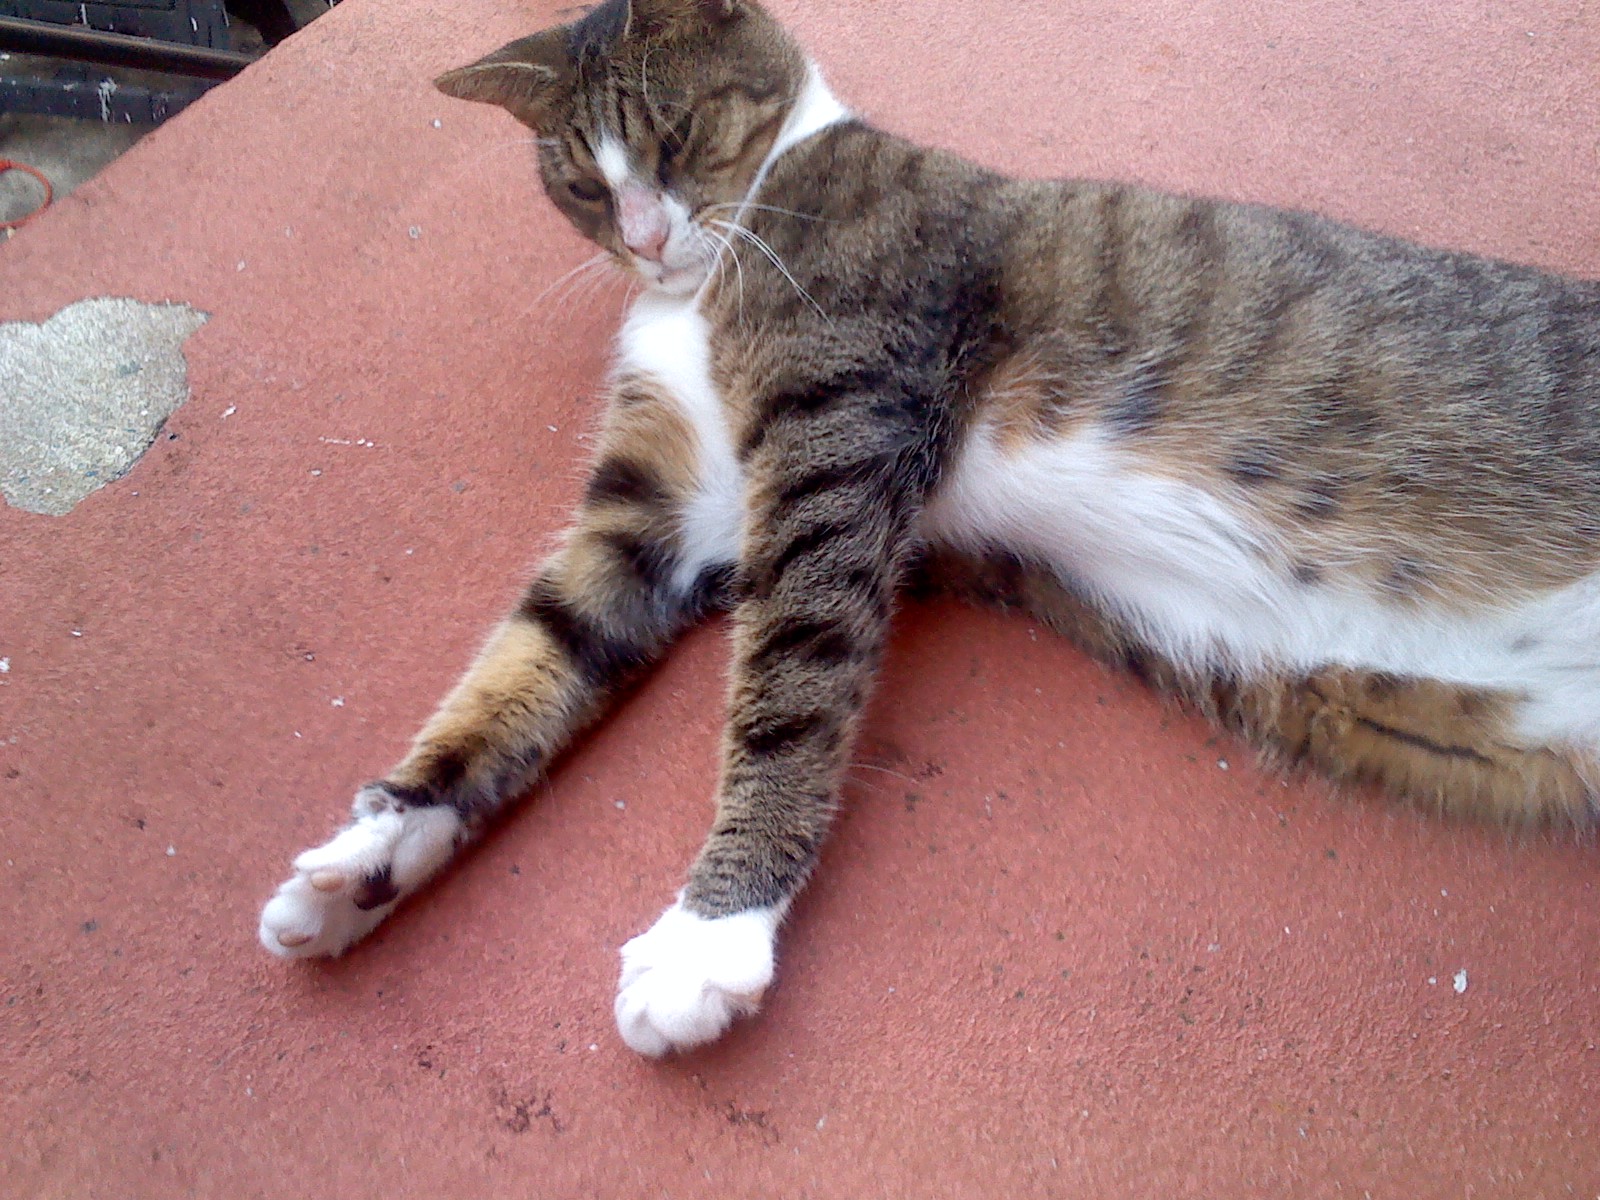 Sally made friends with a three-legged cat neighbor.